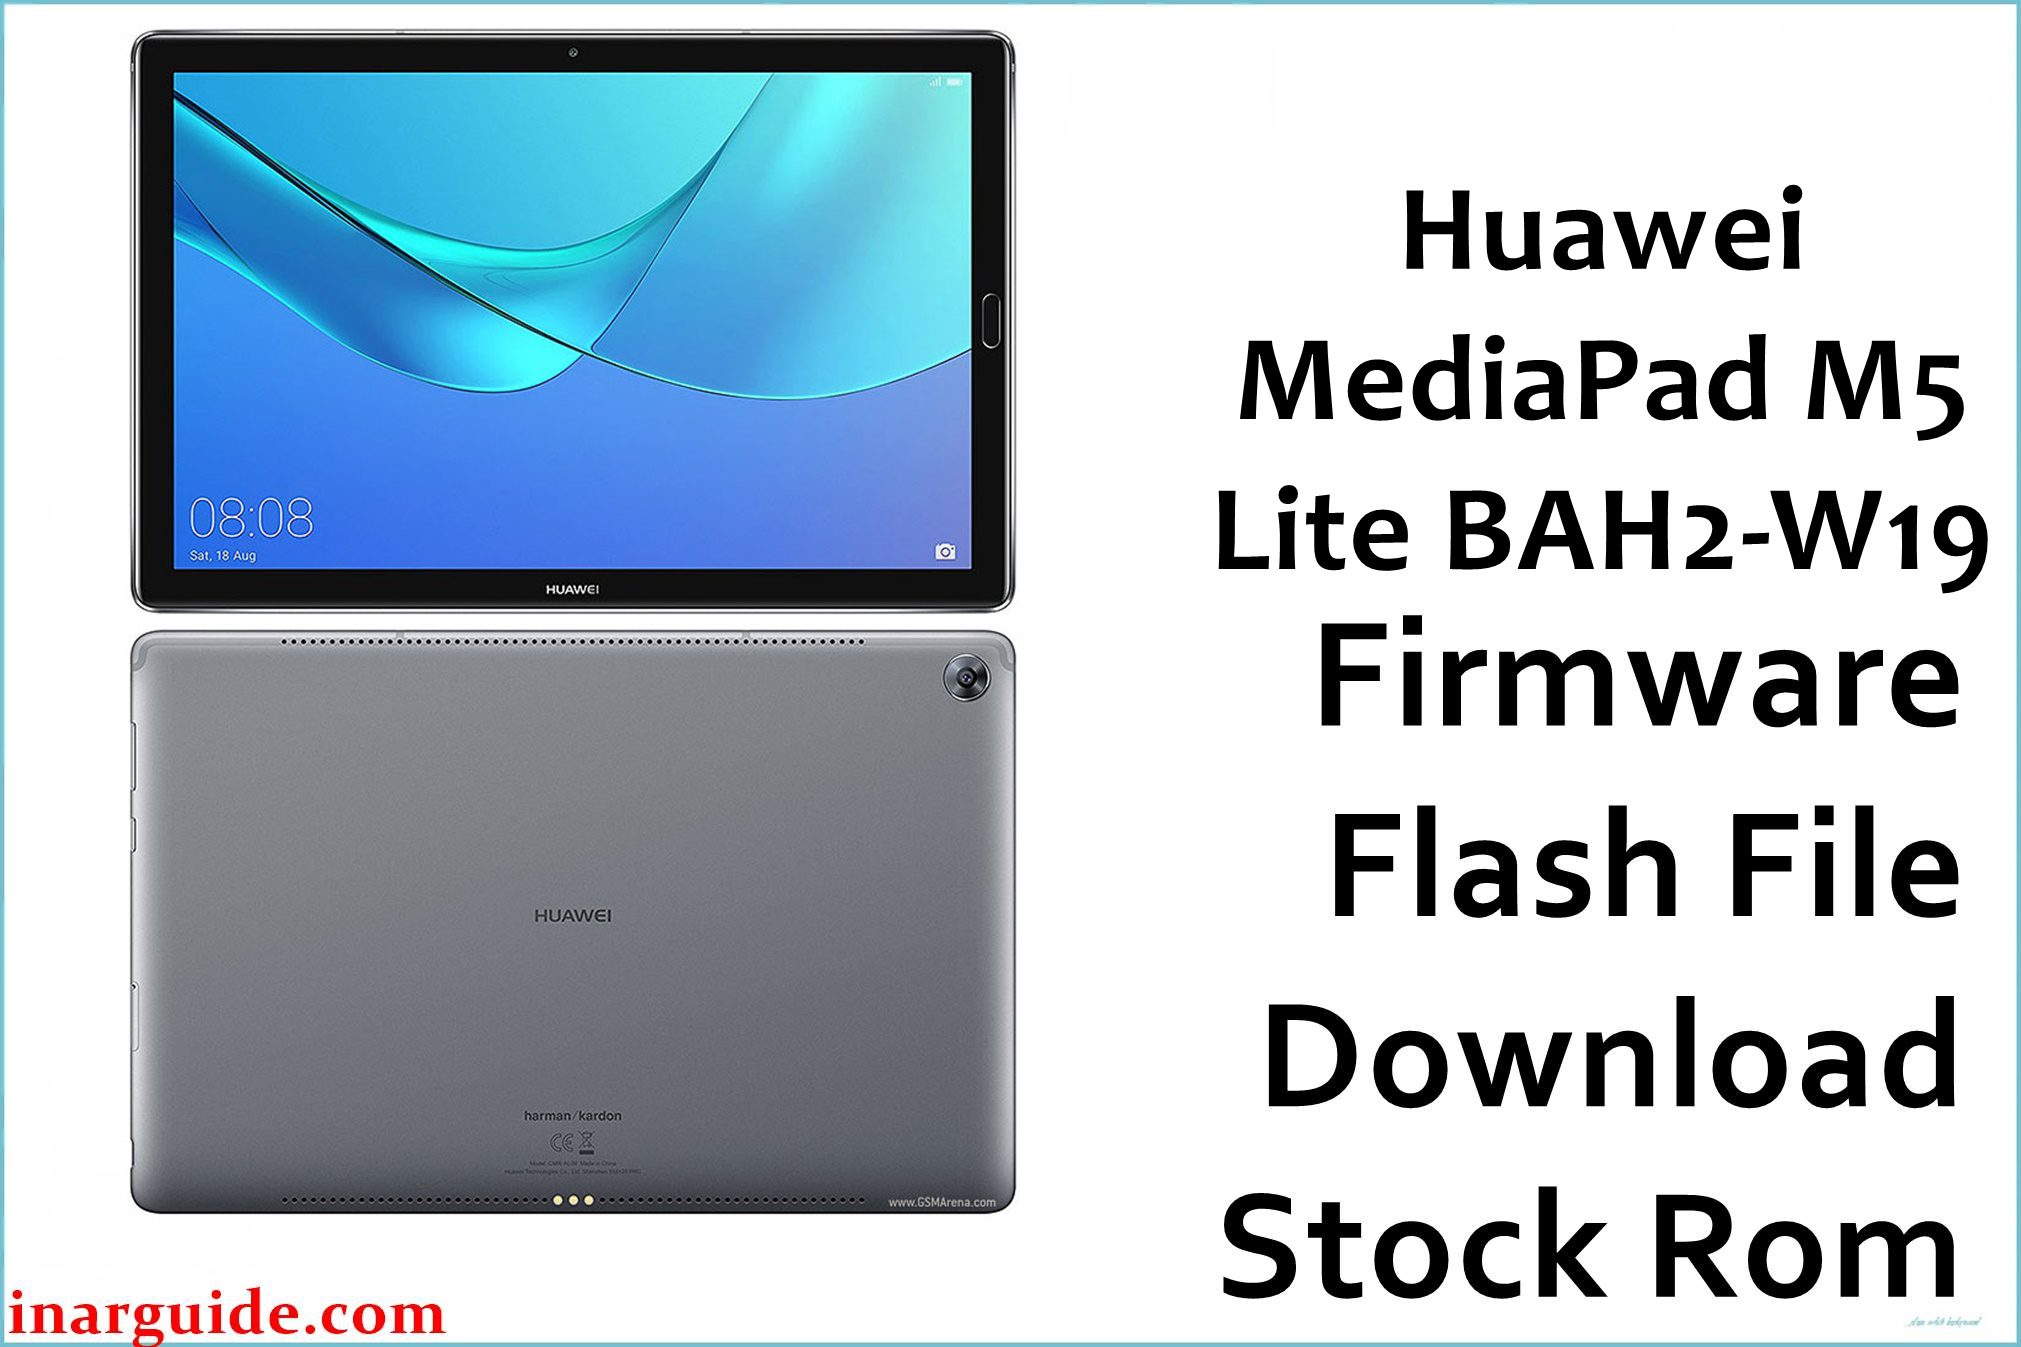 Huawei MediaPad M5 Lite BAH2 W19